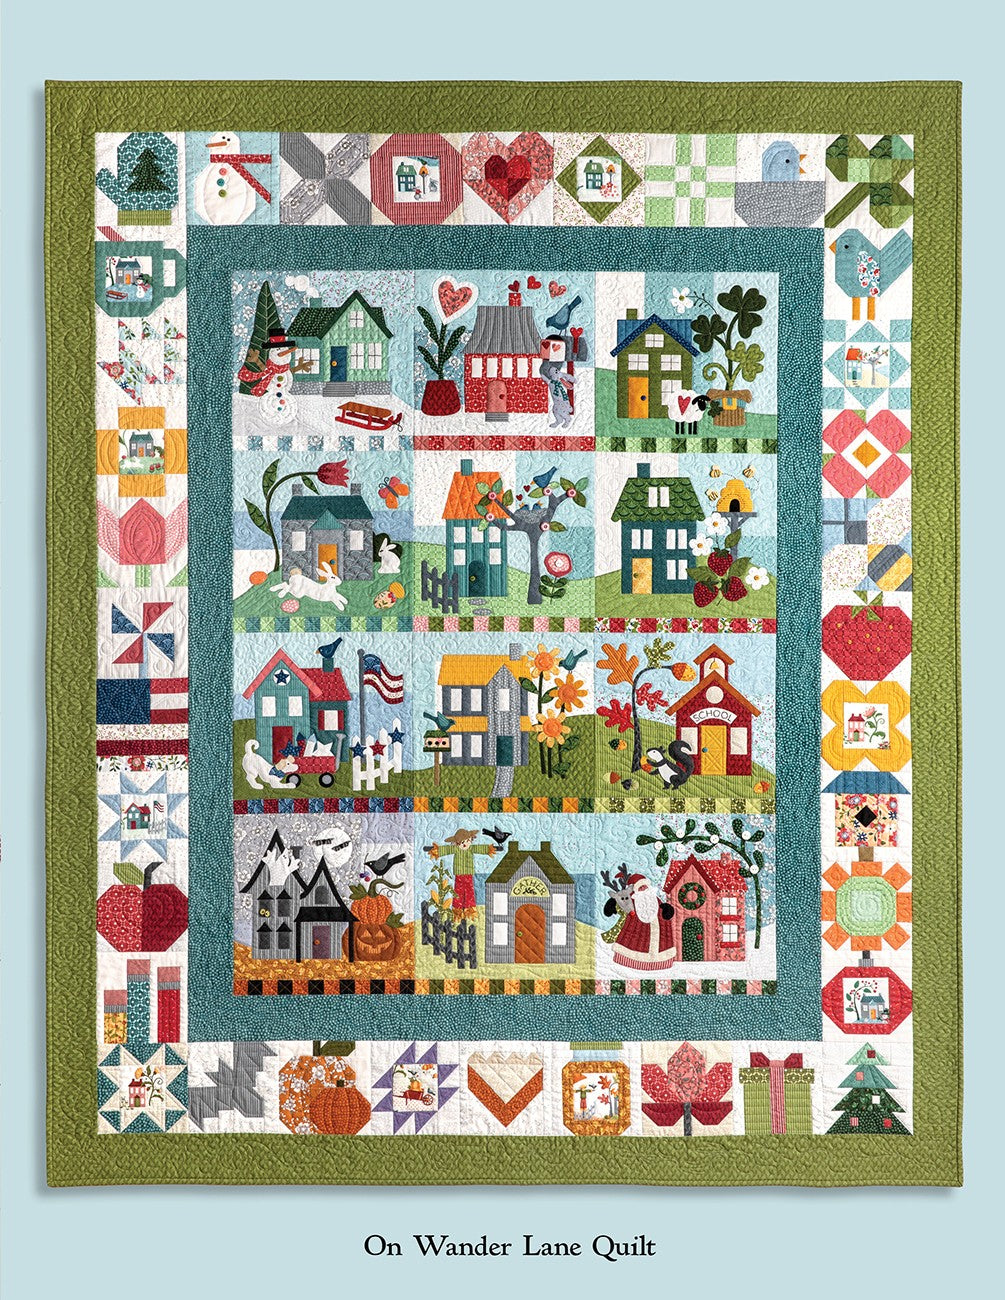 Schoolhouse Haven on Wander Lane Quilt Pattern (September - Block 9) by Nancy Halvorsen of Art to Heart